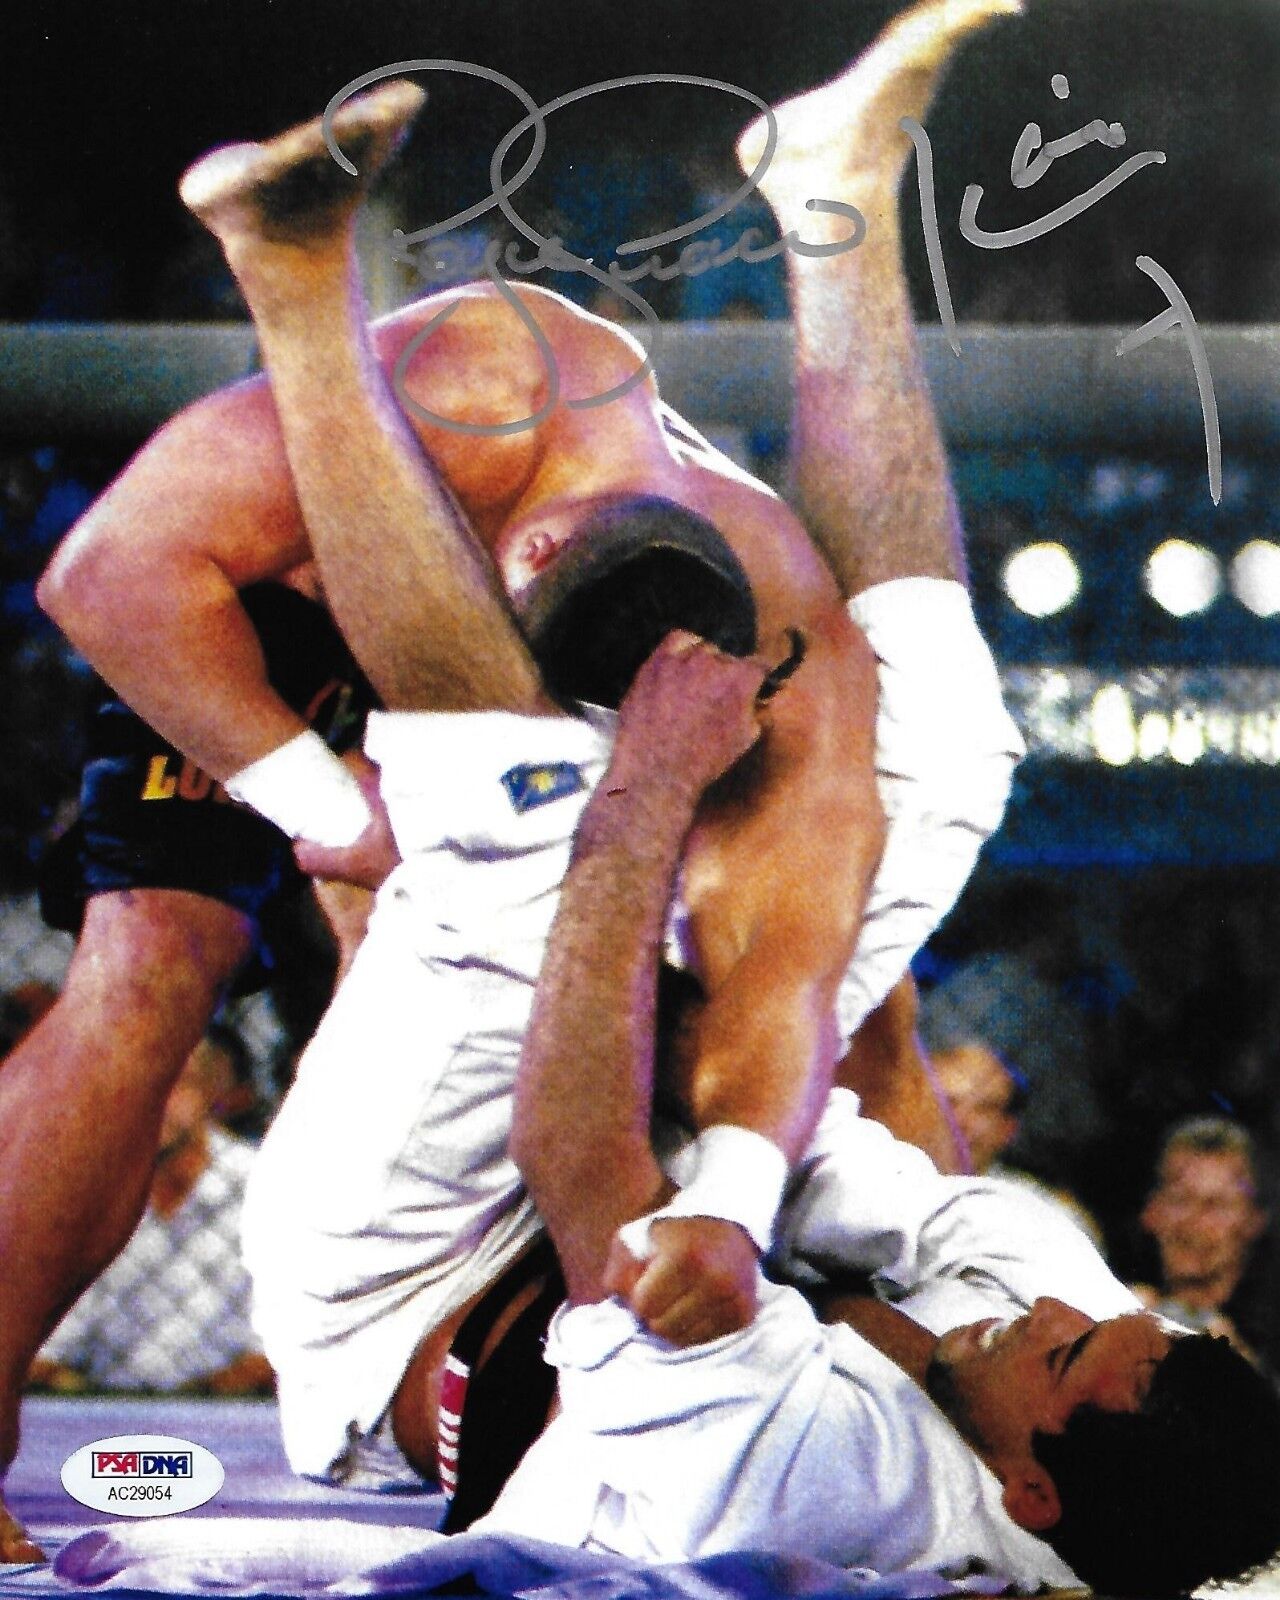 Royce Gracie & Kimo Leopoldo Signed UFC 3 8x10 Photo Poster painting PSA/DNA Picture Autograph 1